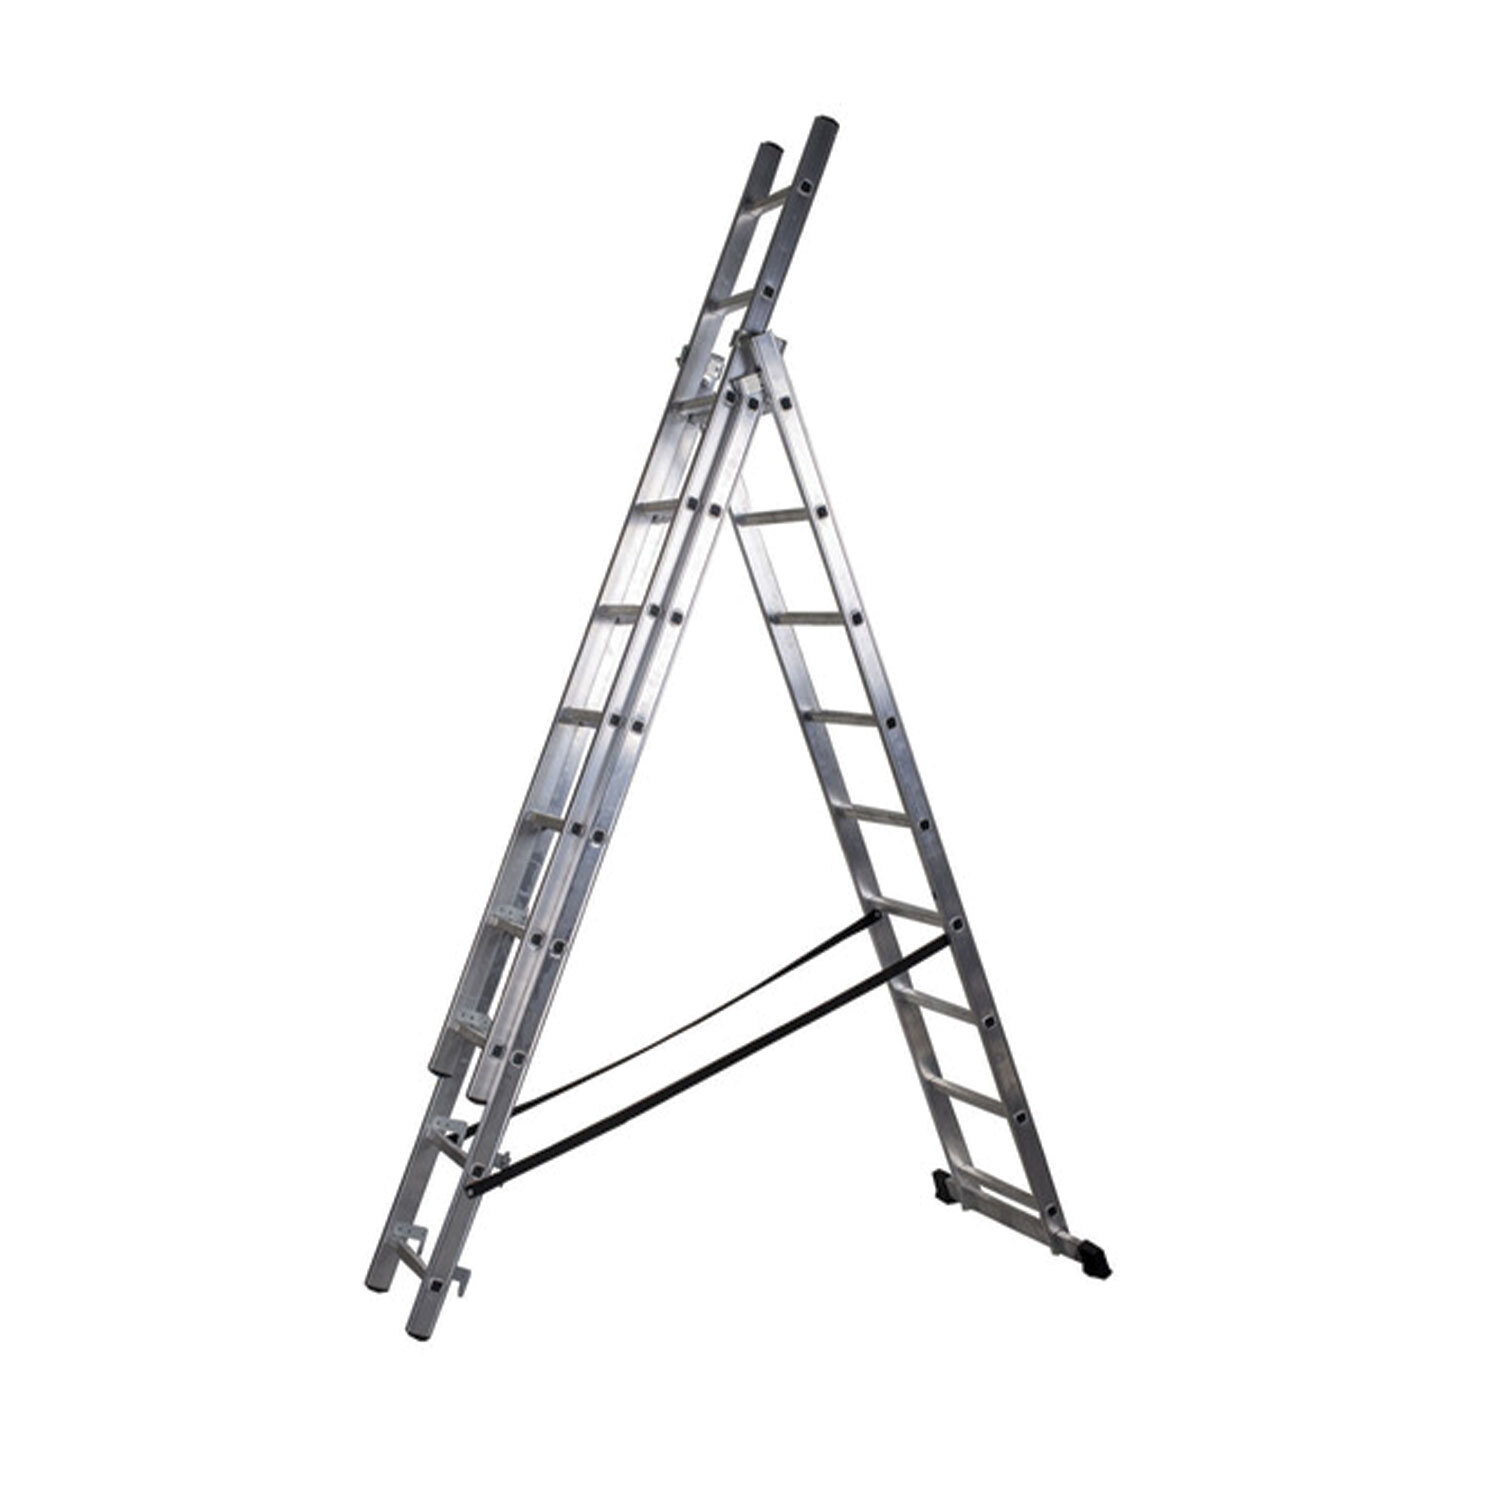 Drabest 3 Section Aluminium Combination Ladder Image 2